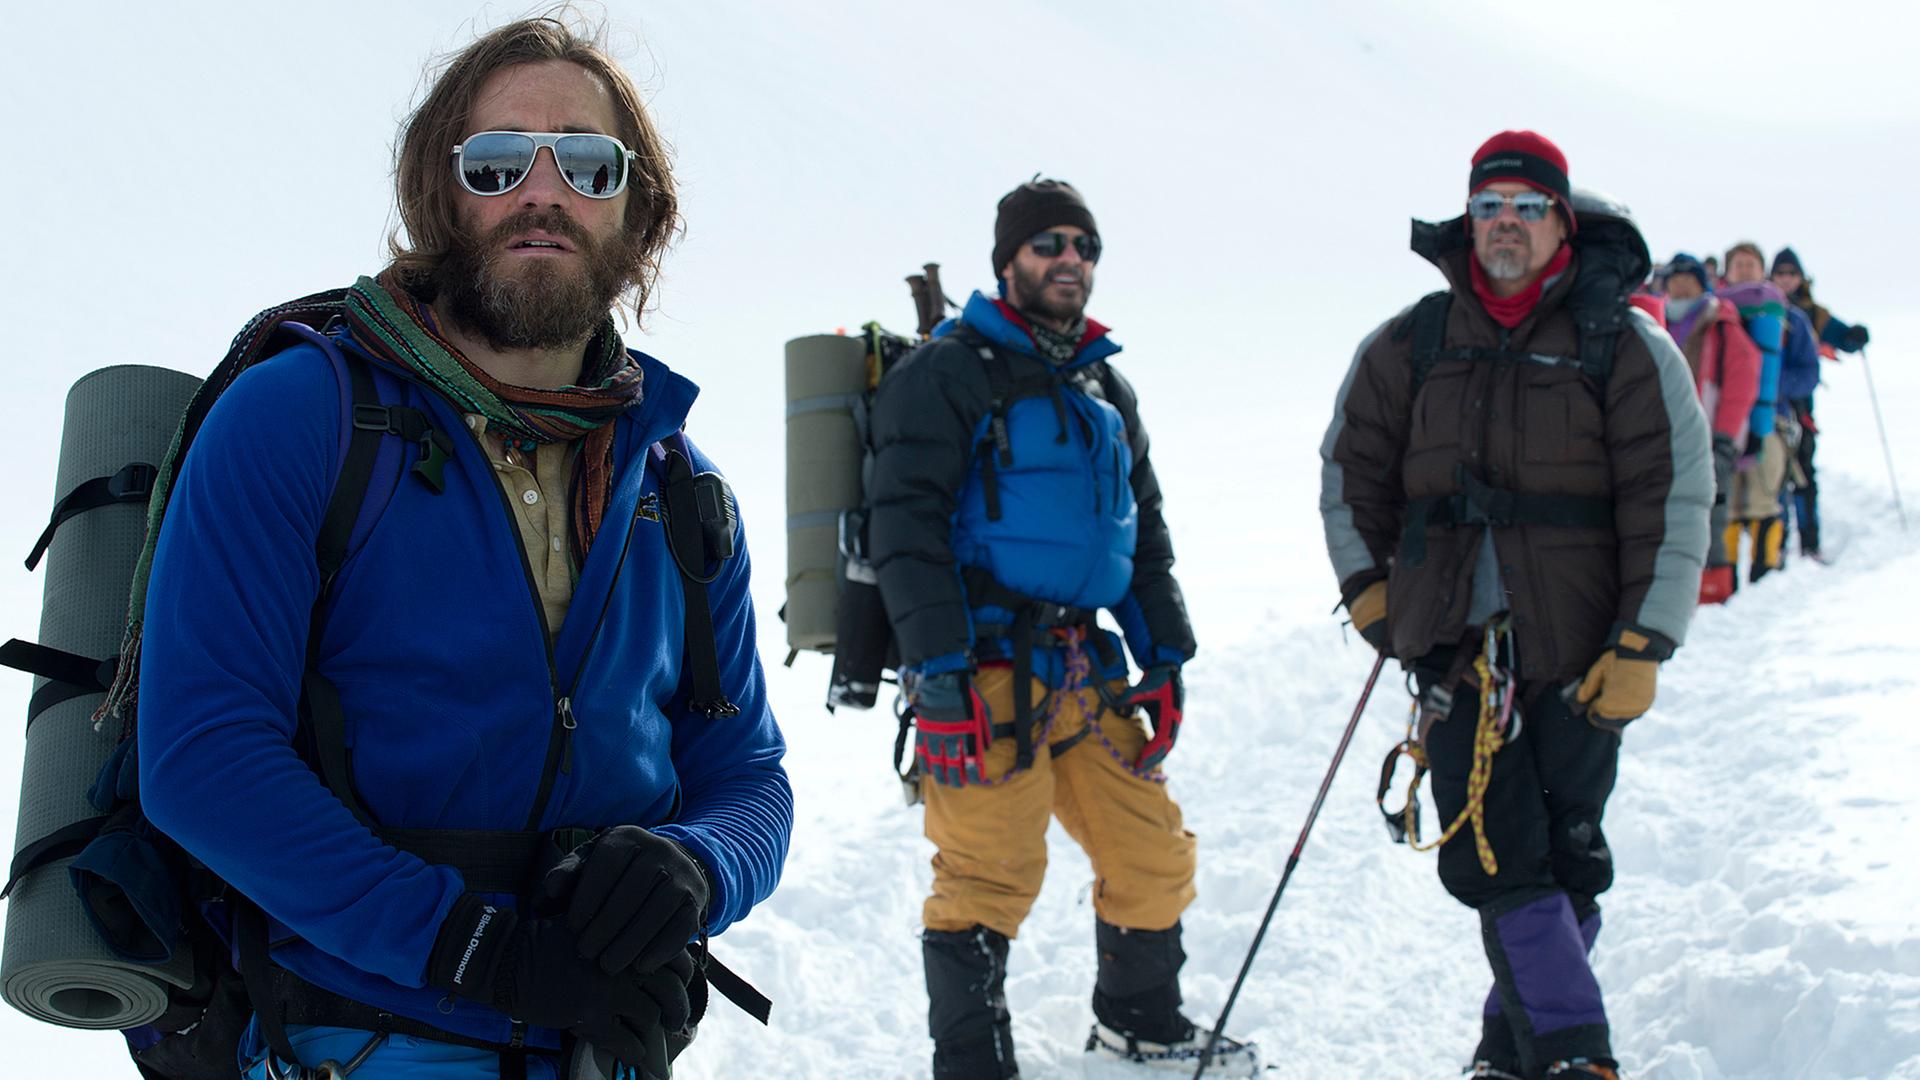 Szene des Kinofilms "Everest"